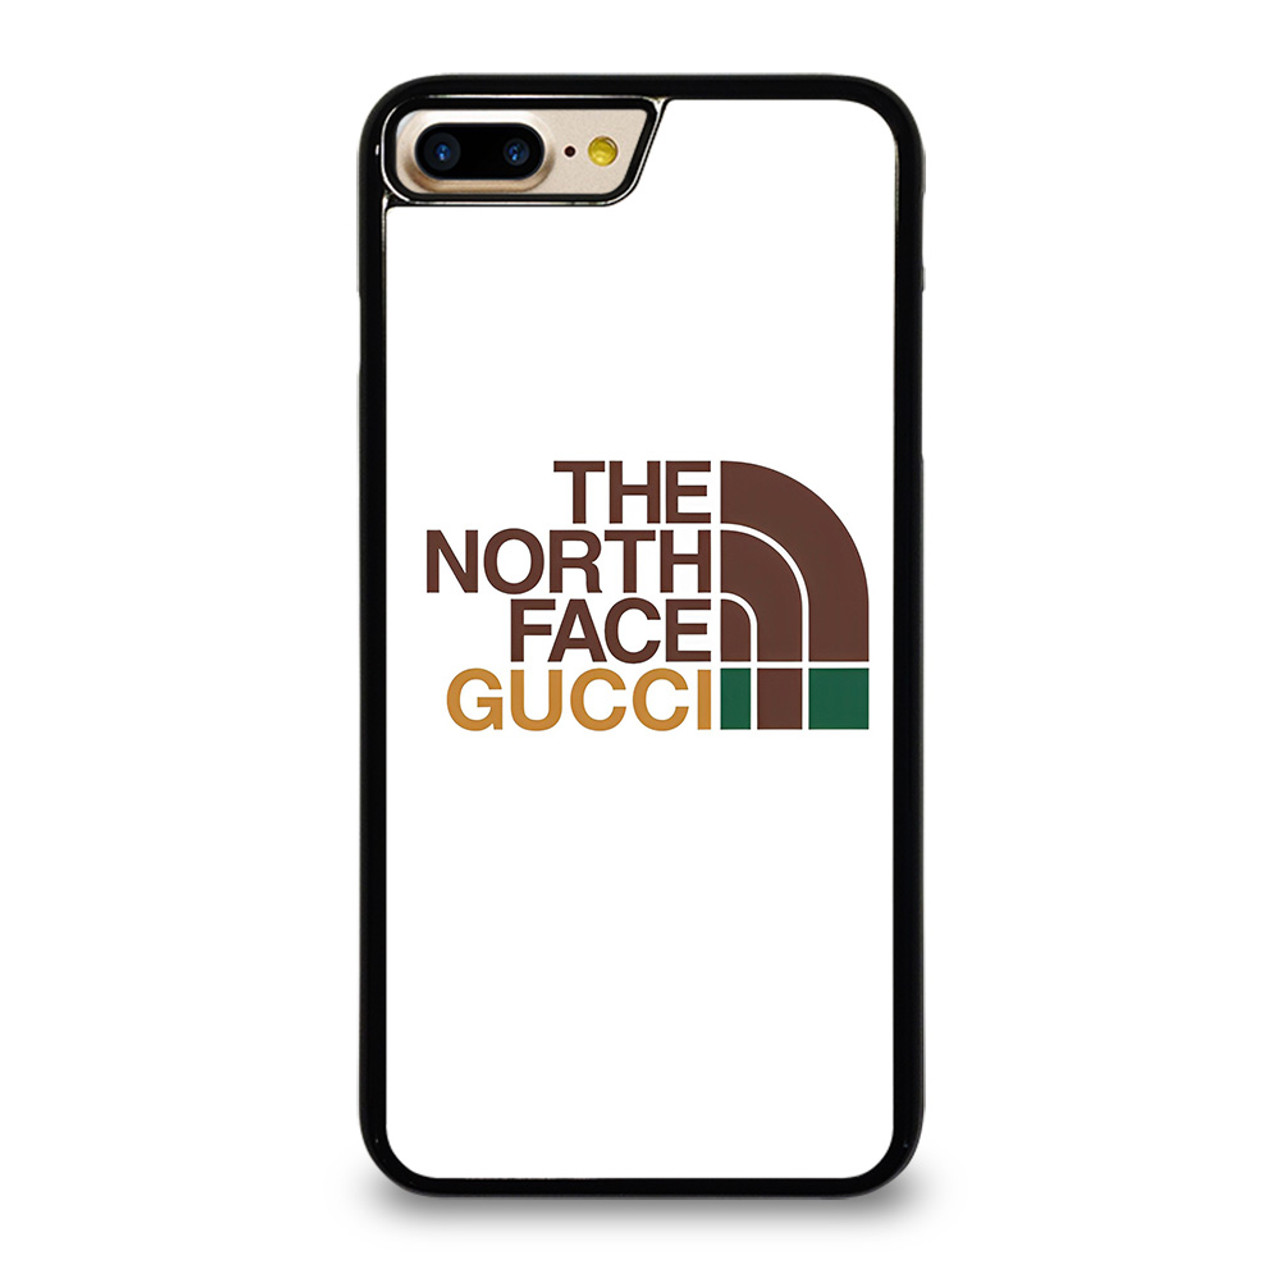 NORTH FACE 7 / 8 Plus Case Cover